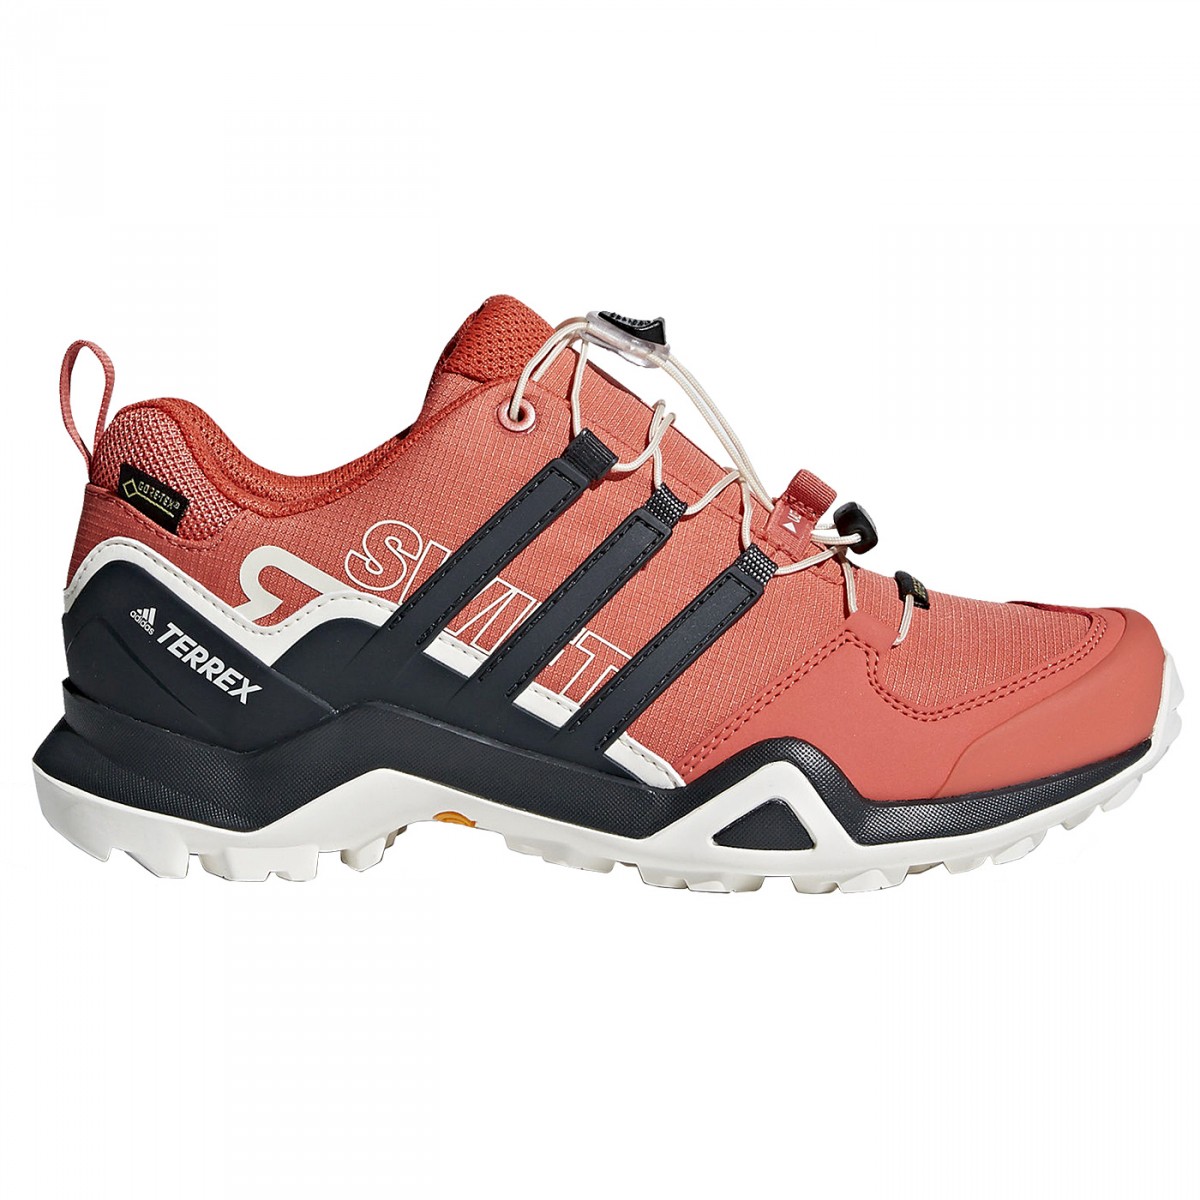 Hiking shoes Adidas Terrex Swift R2 Gtx Woman - Trekking shoes